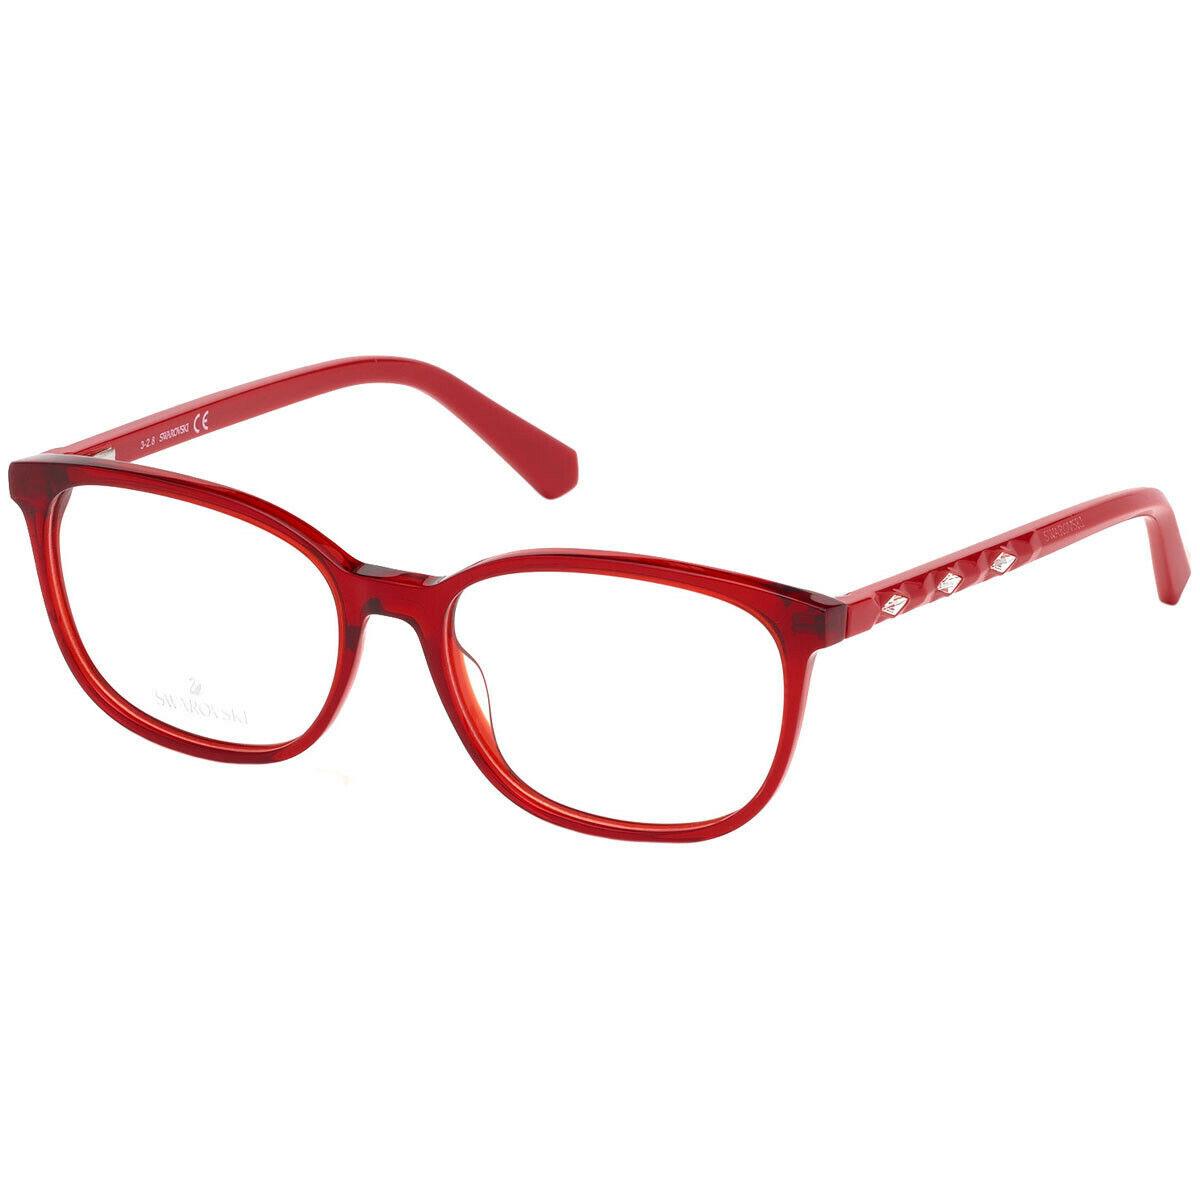 Swarovski SW 5300-F 066 Red Plastic Eyeglasses 54-16-140 5300F Asian Fit Glasses